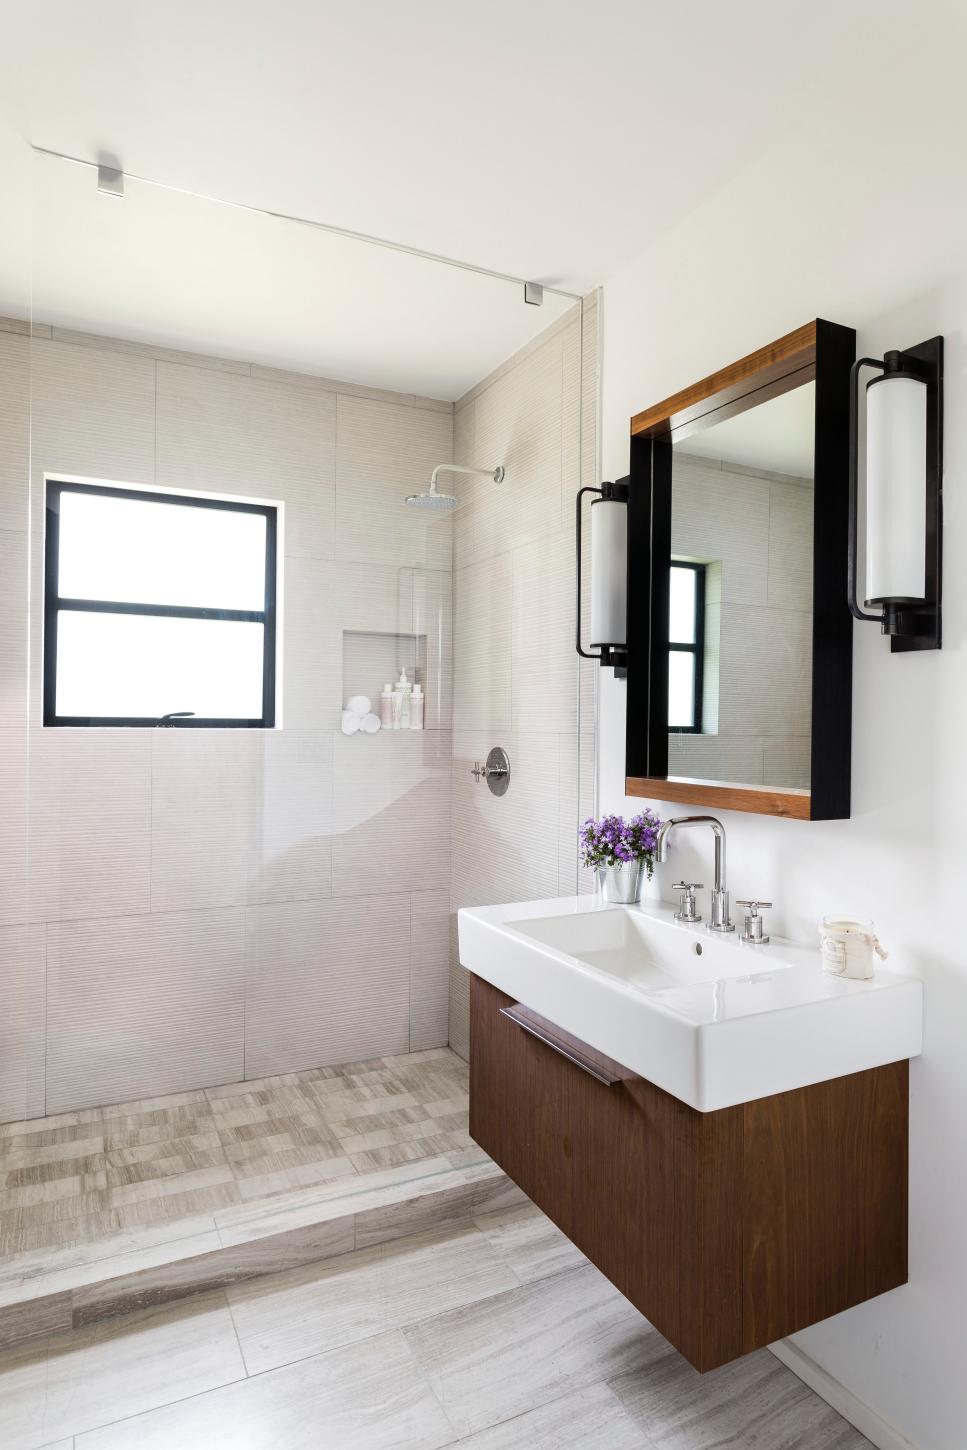 Small Yet Luxurious Bathroom With Floating Vanity | HGTV
